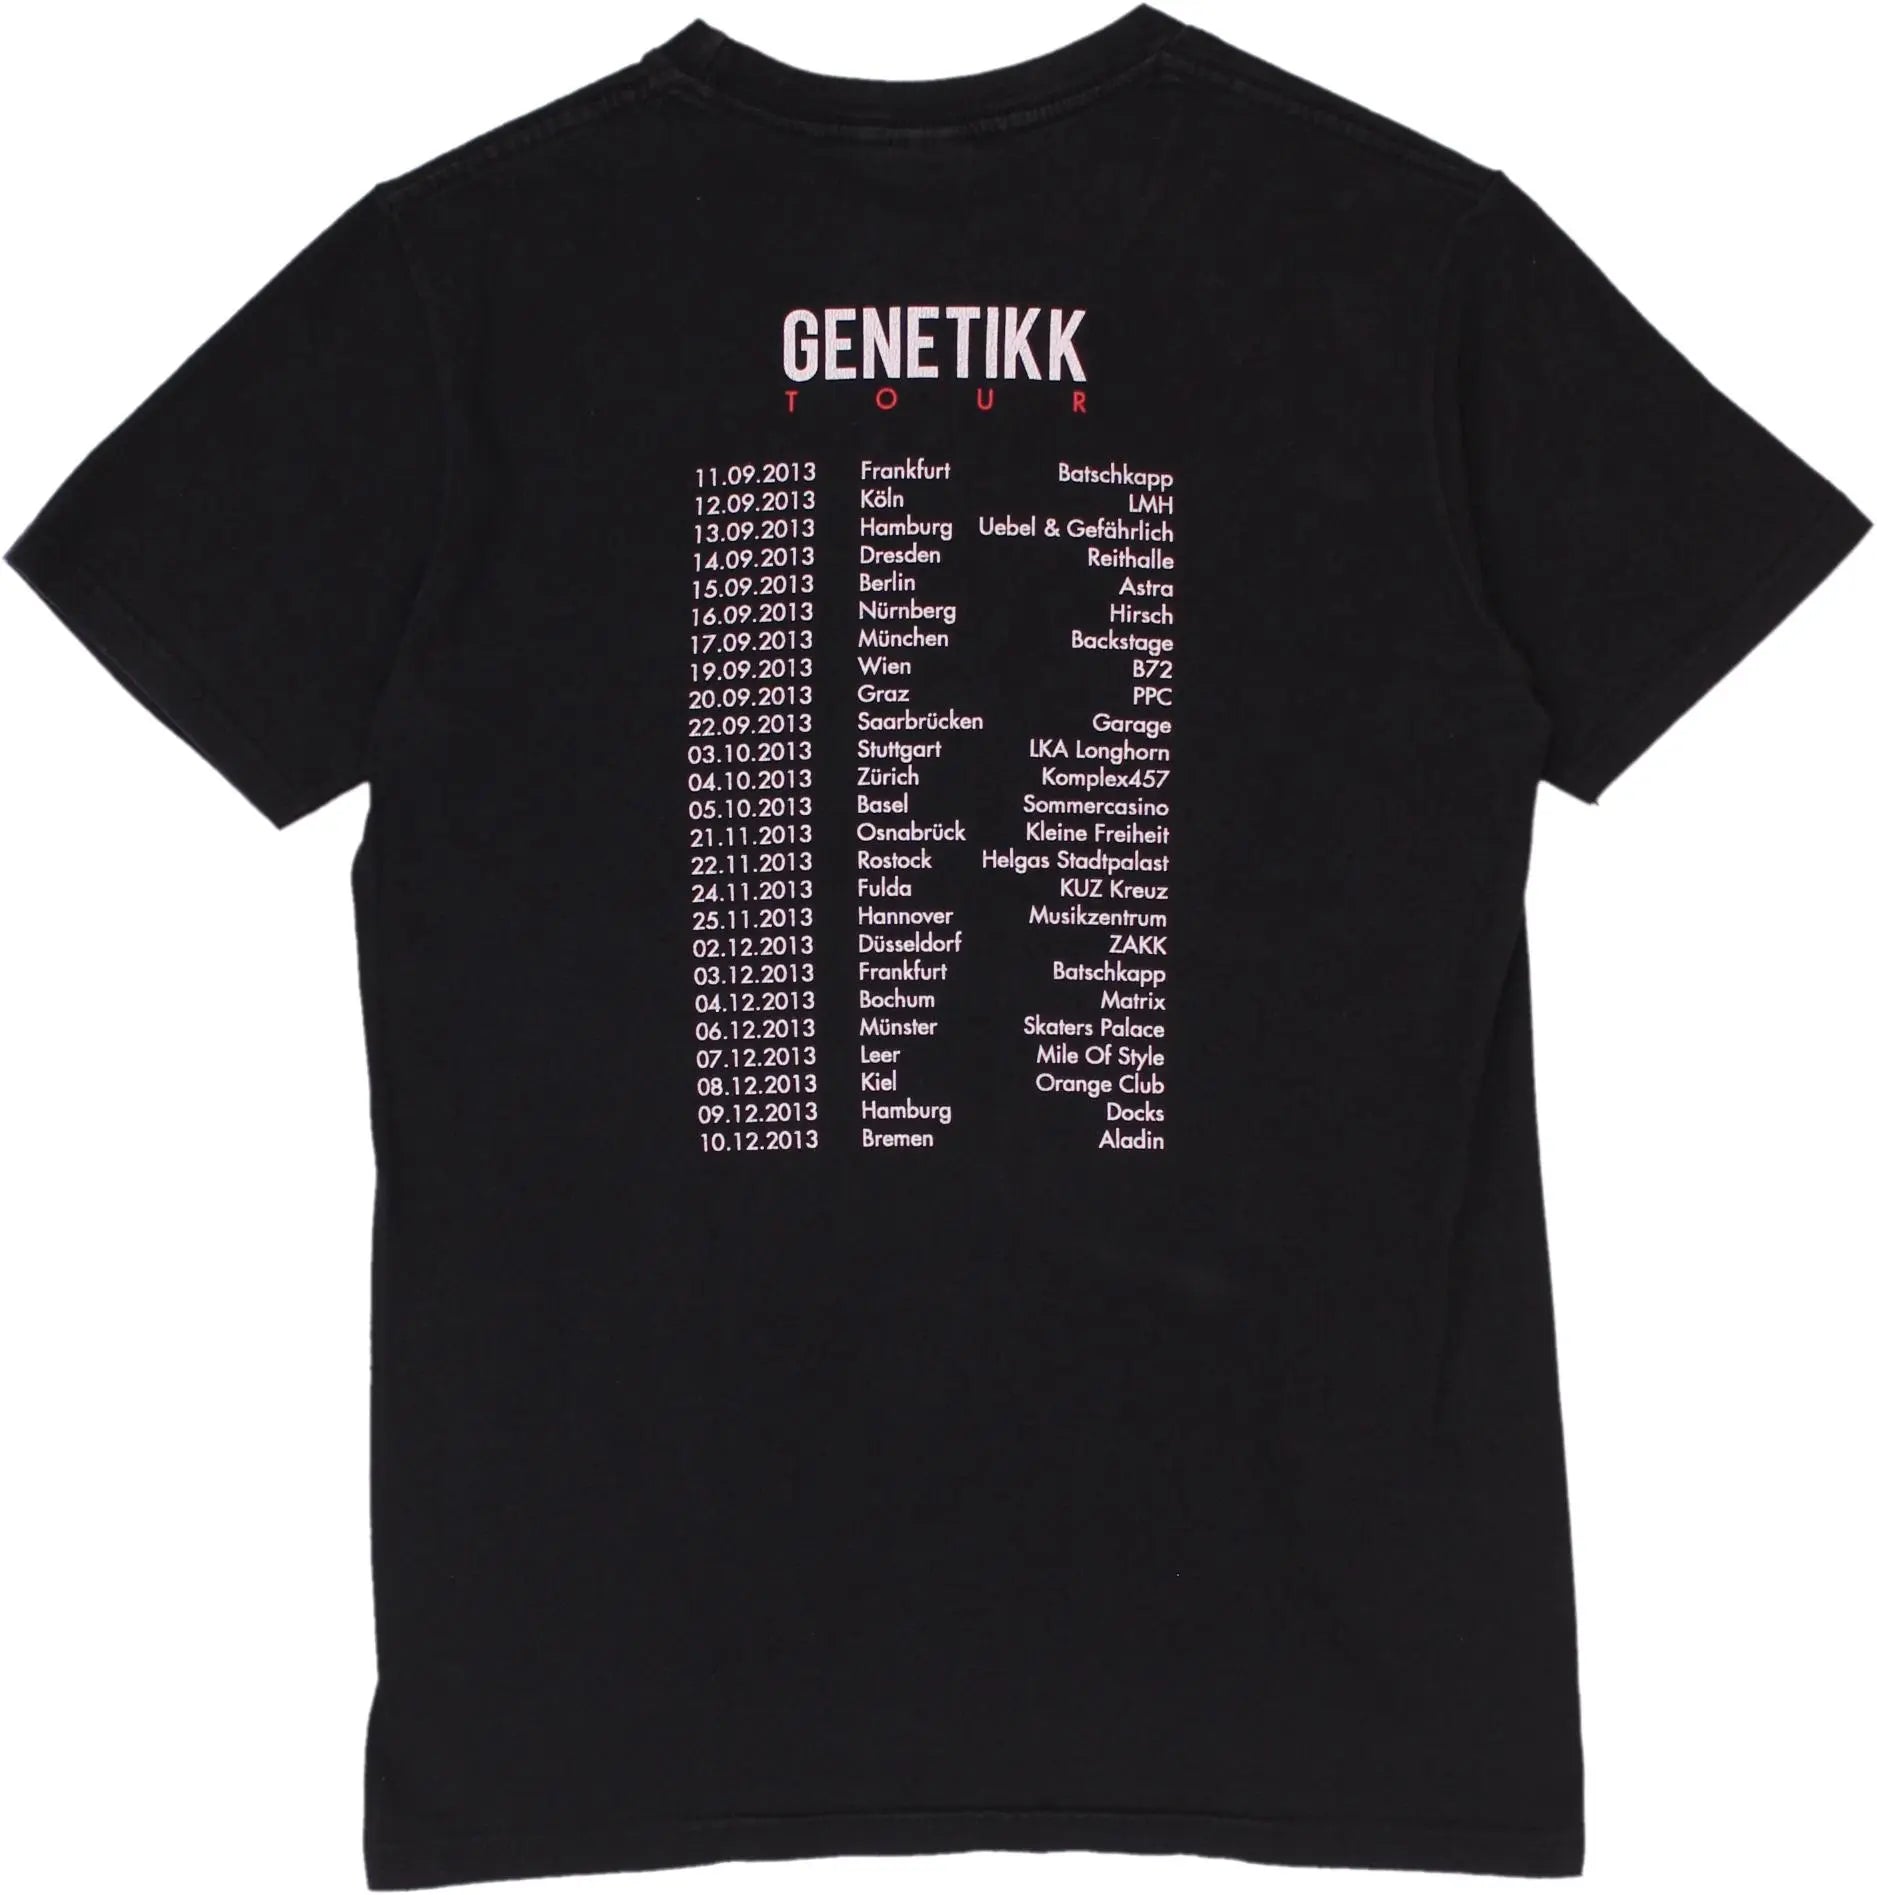 Gildan - Gentikk Band T-shirt- ThriftTale.com - Vintage and second handclothing